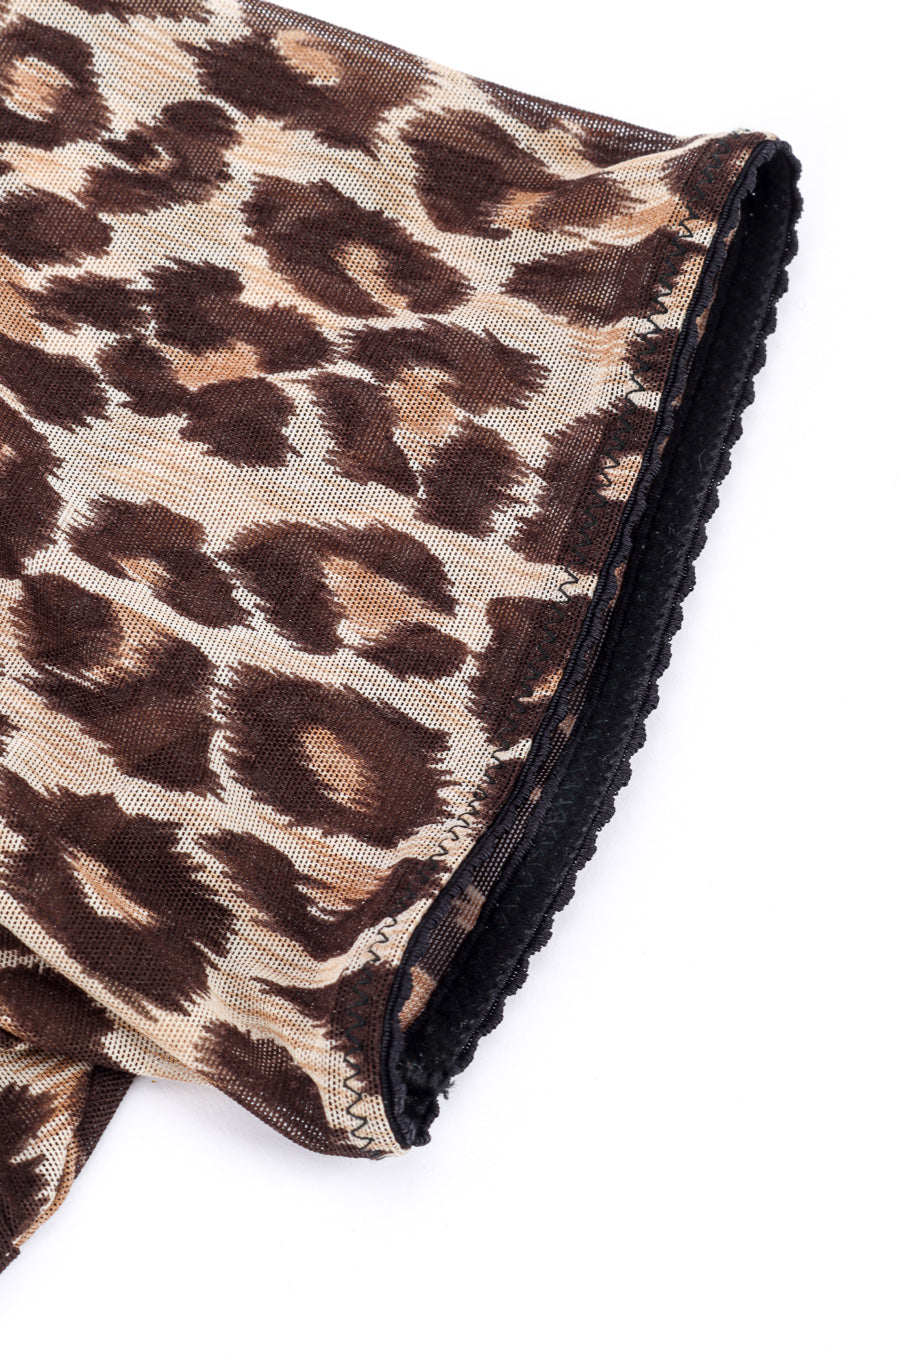 Leopard Mesh Top by Dolce & Gabbana scalloped sleeve trim  @recessla